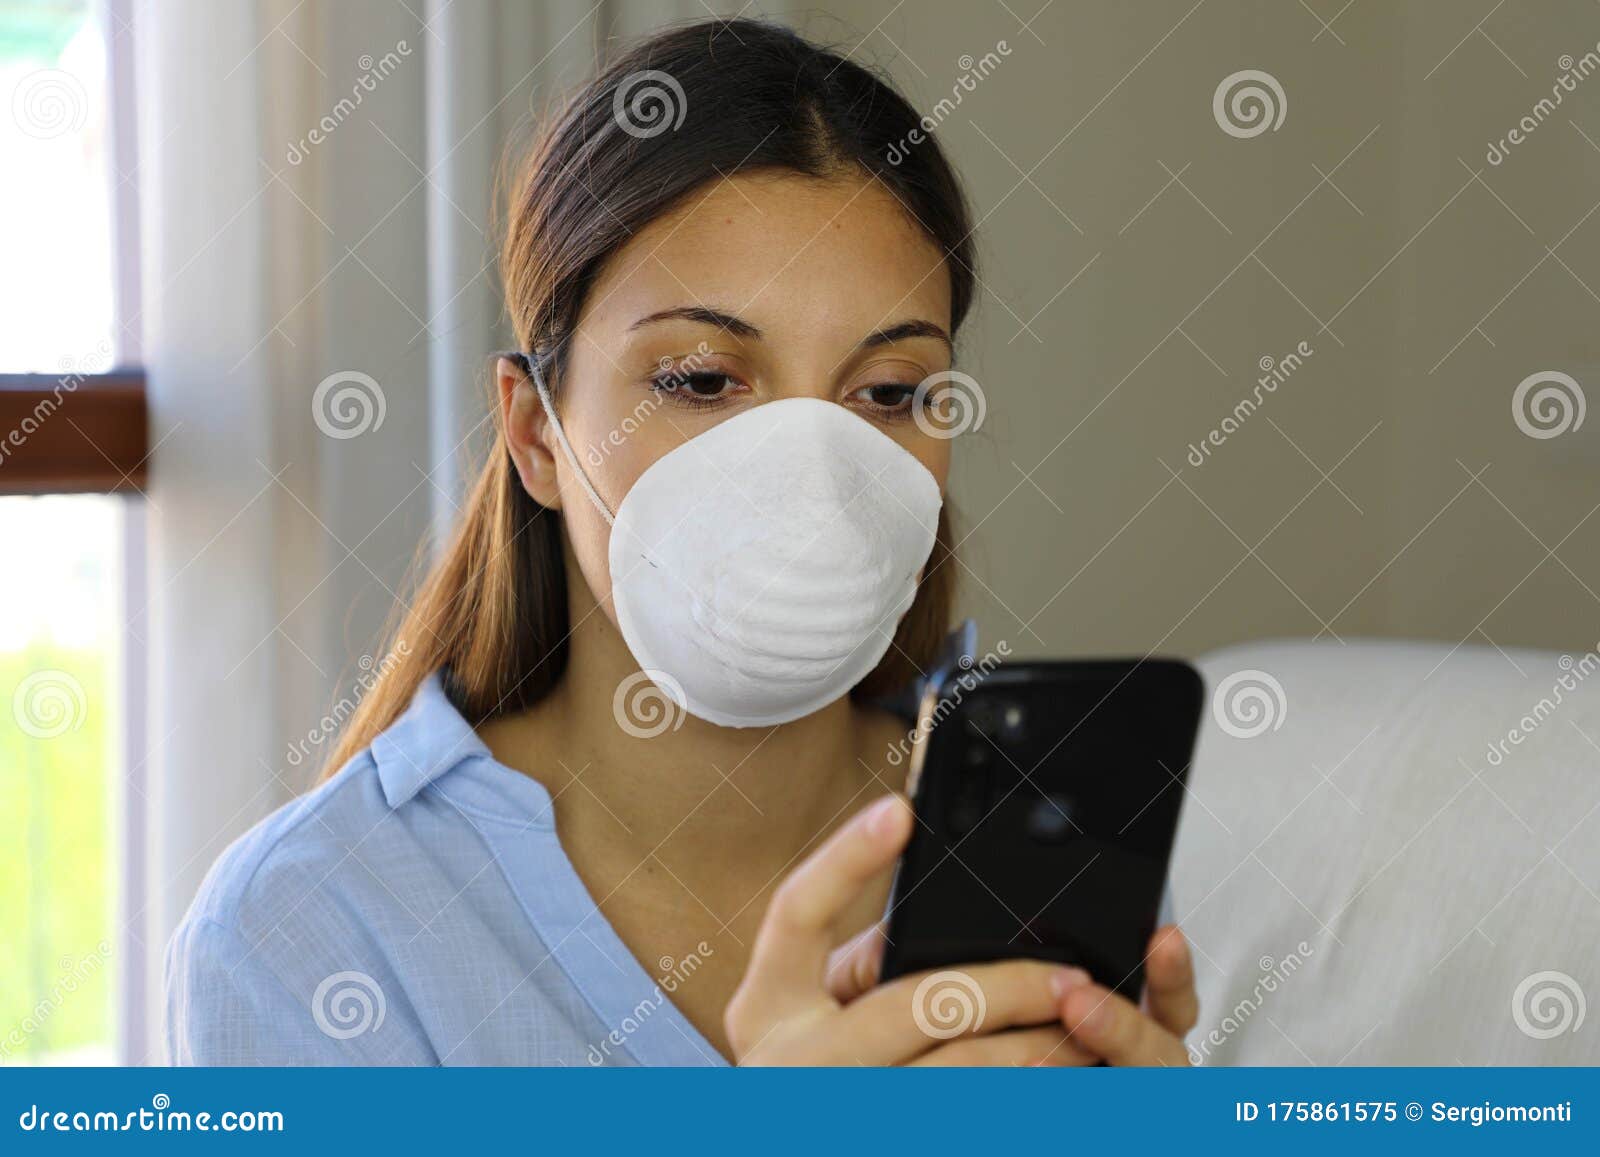 COVID19 Pandemic Coronavirus Mask Woman Home Working Isolat